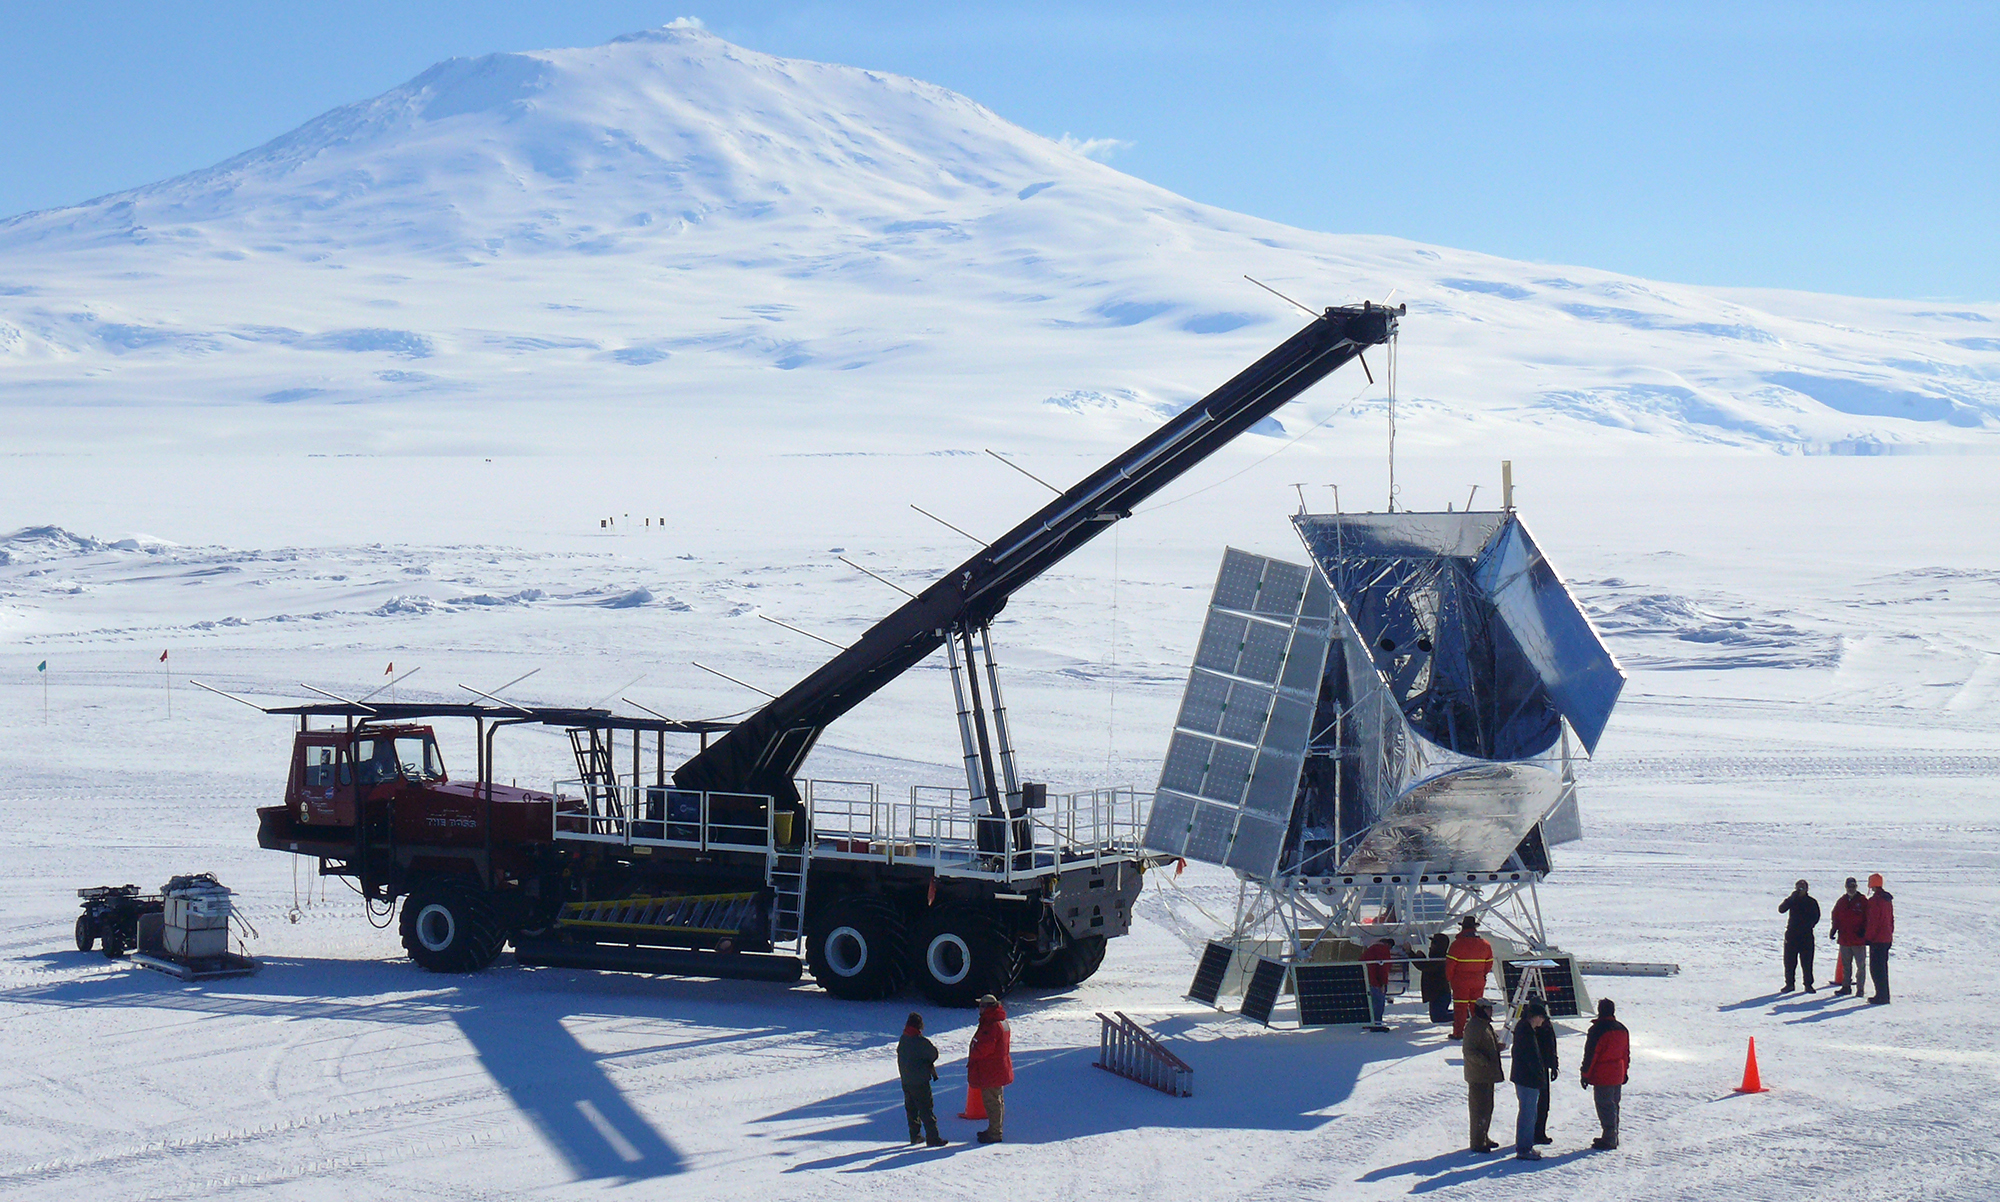 BLAST telescope being lifted by crane in Antarctica